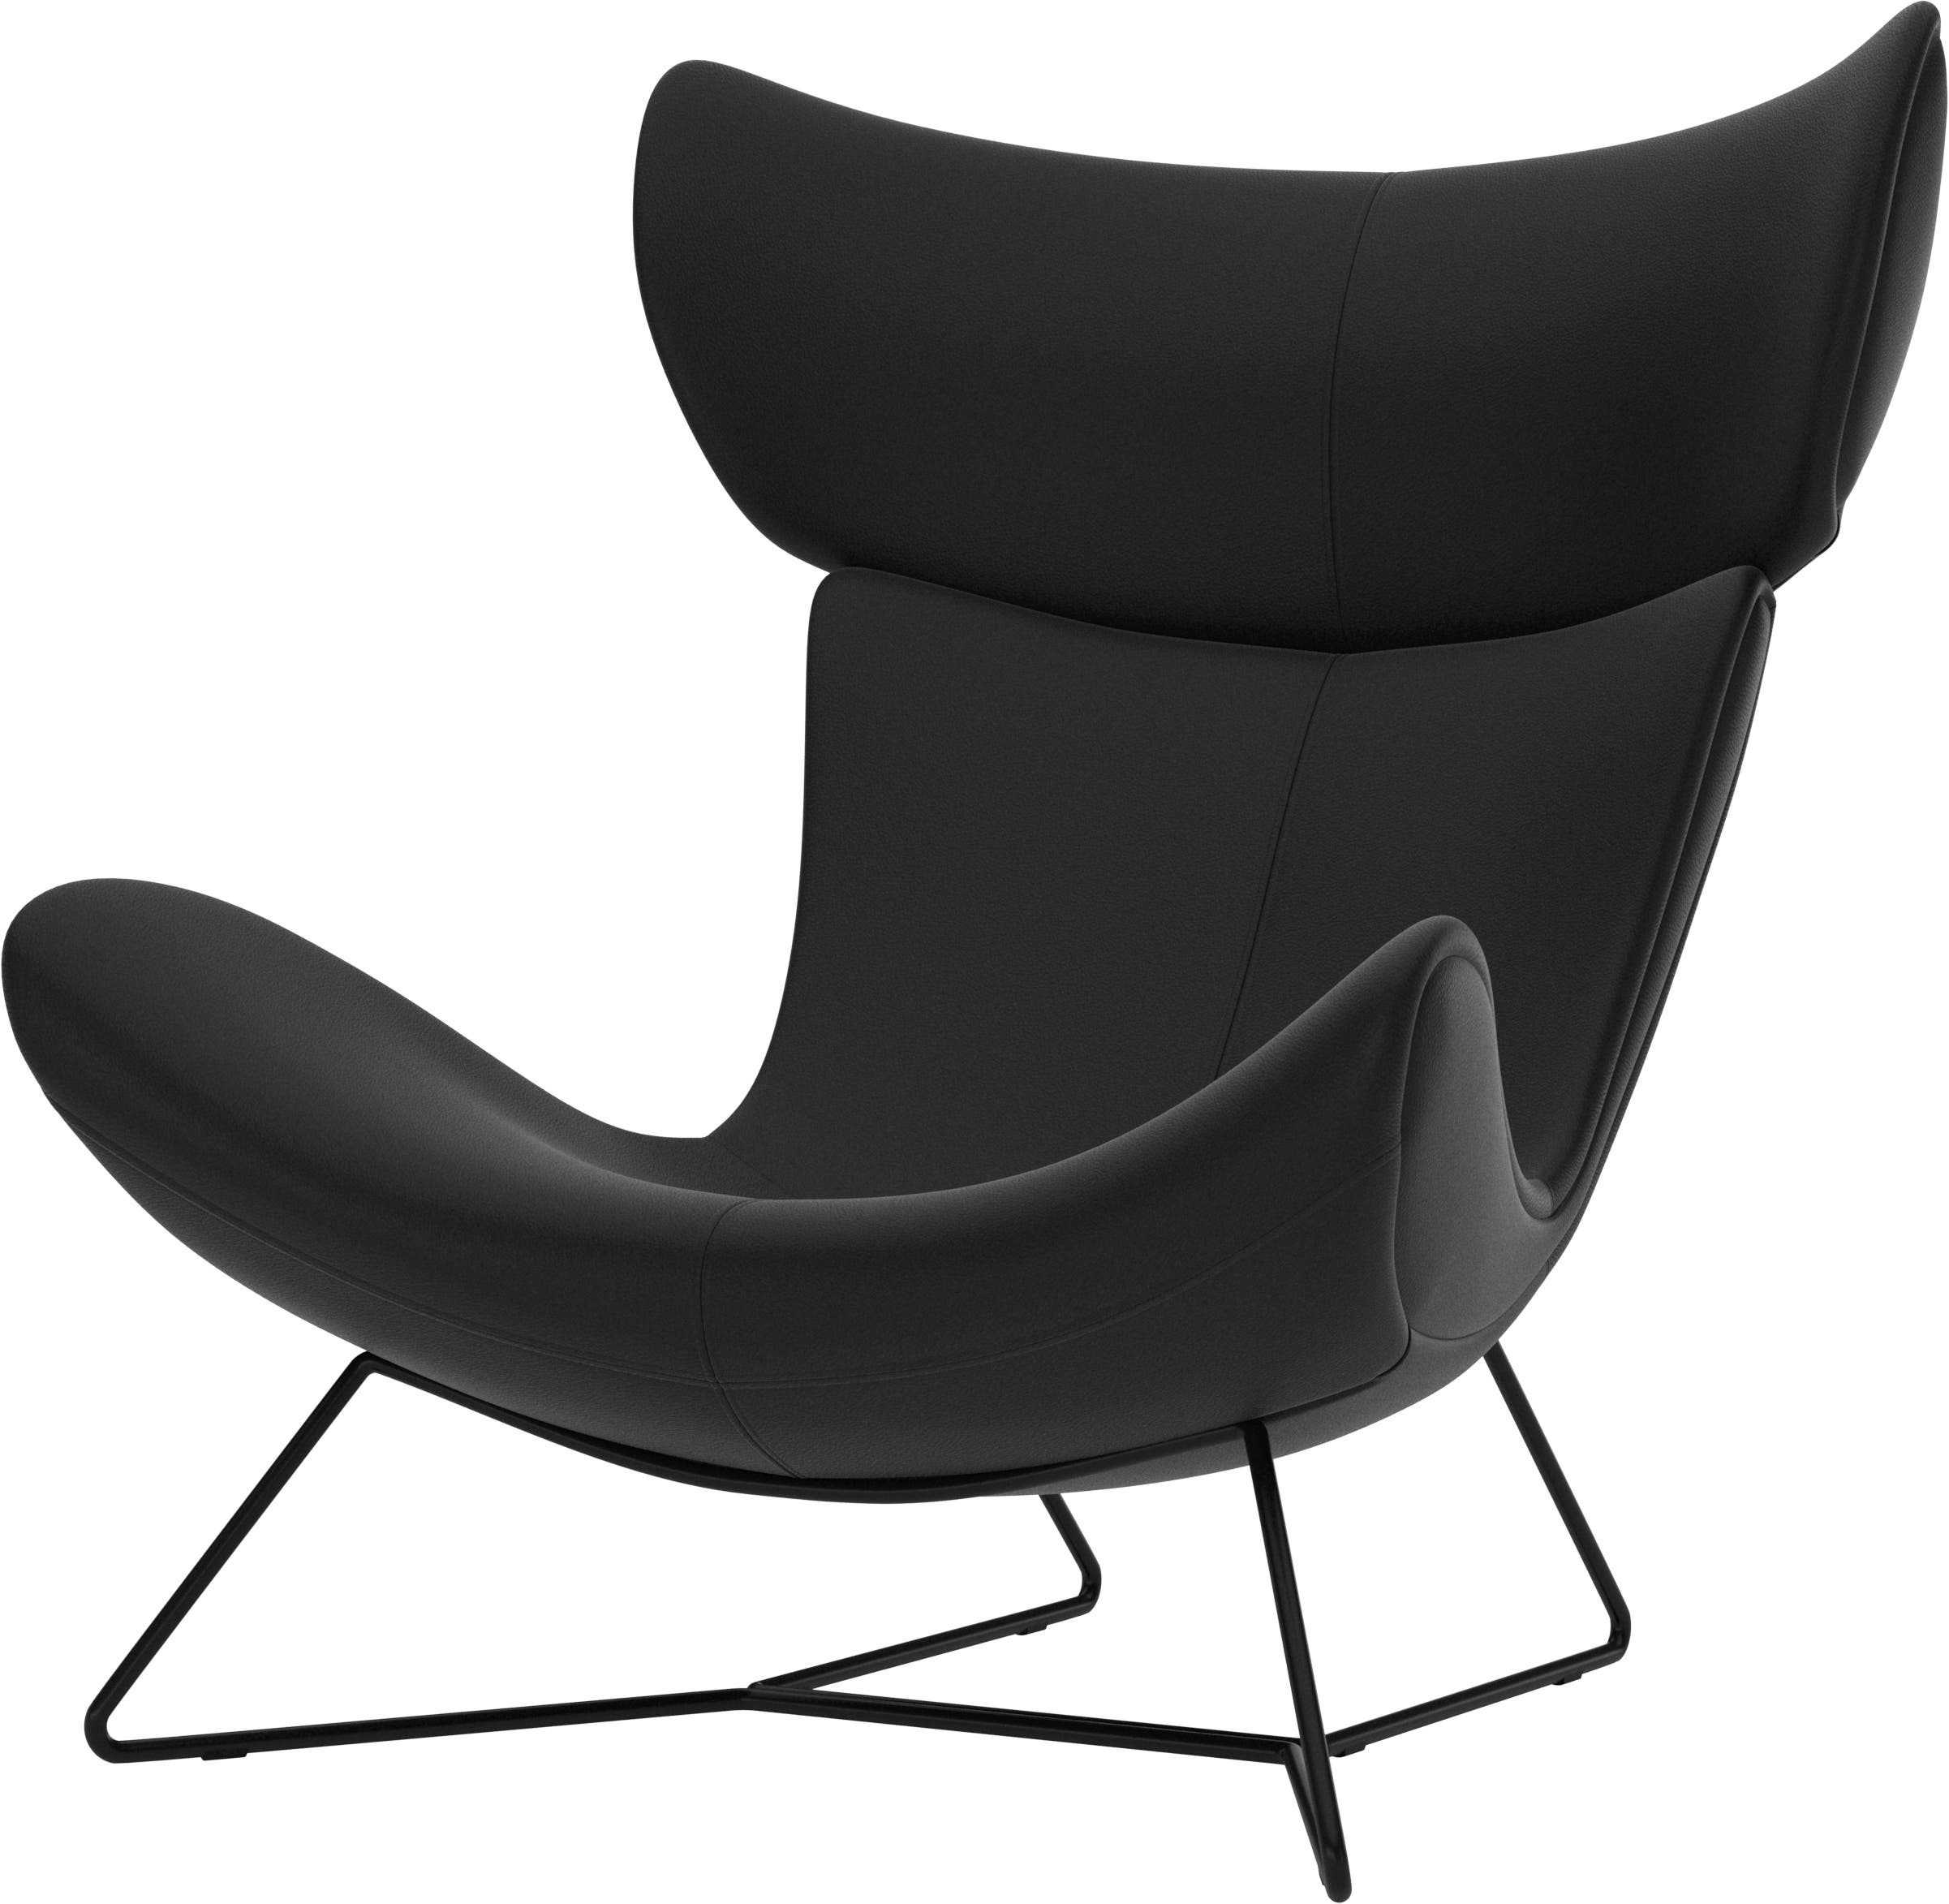 The iconic Imola armchair | Danish furniture design | BoConcept